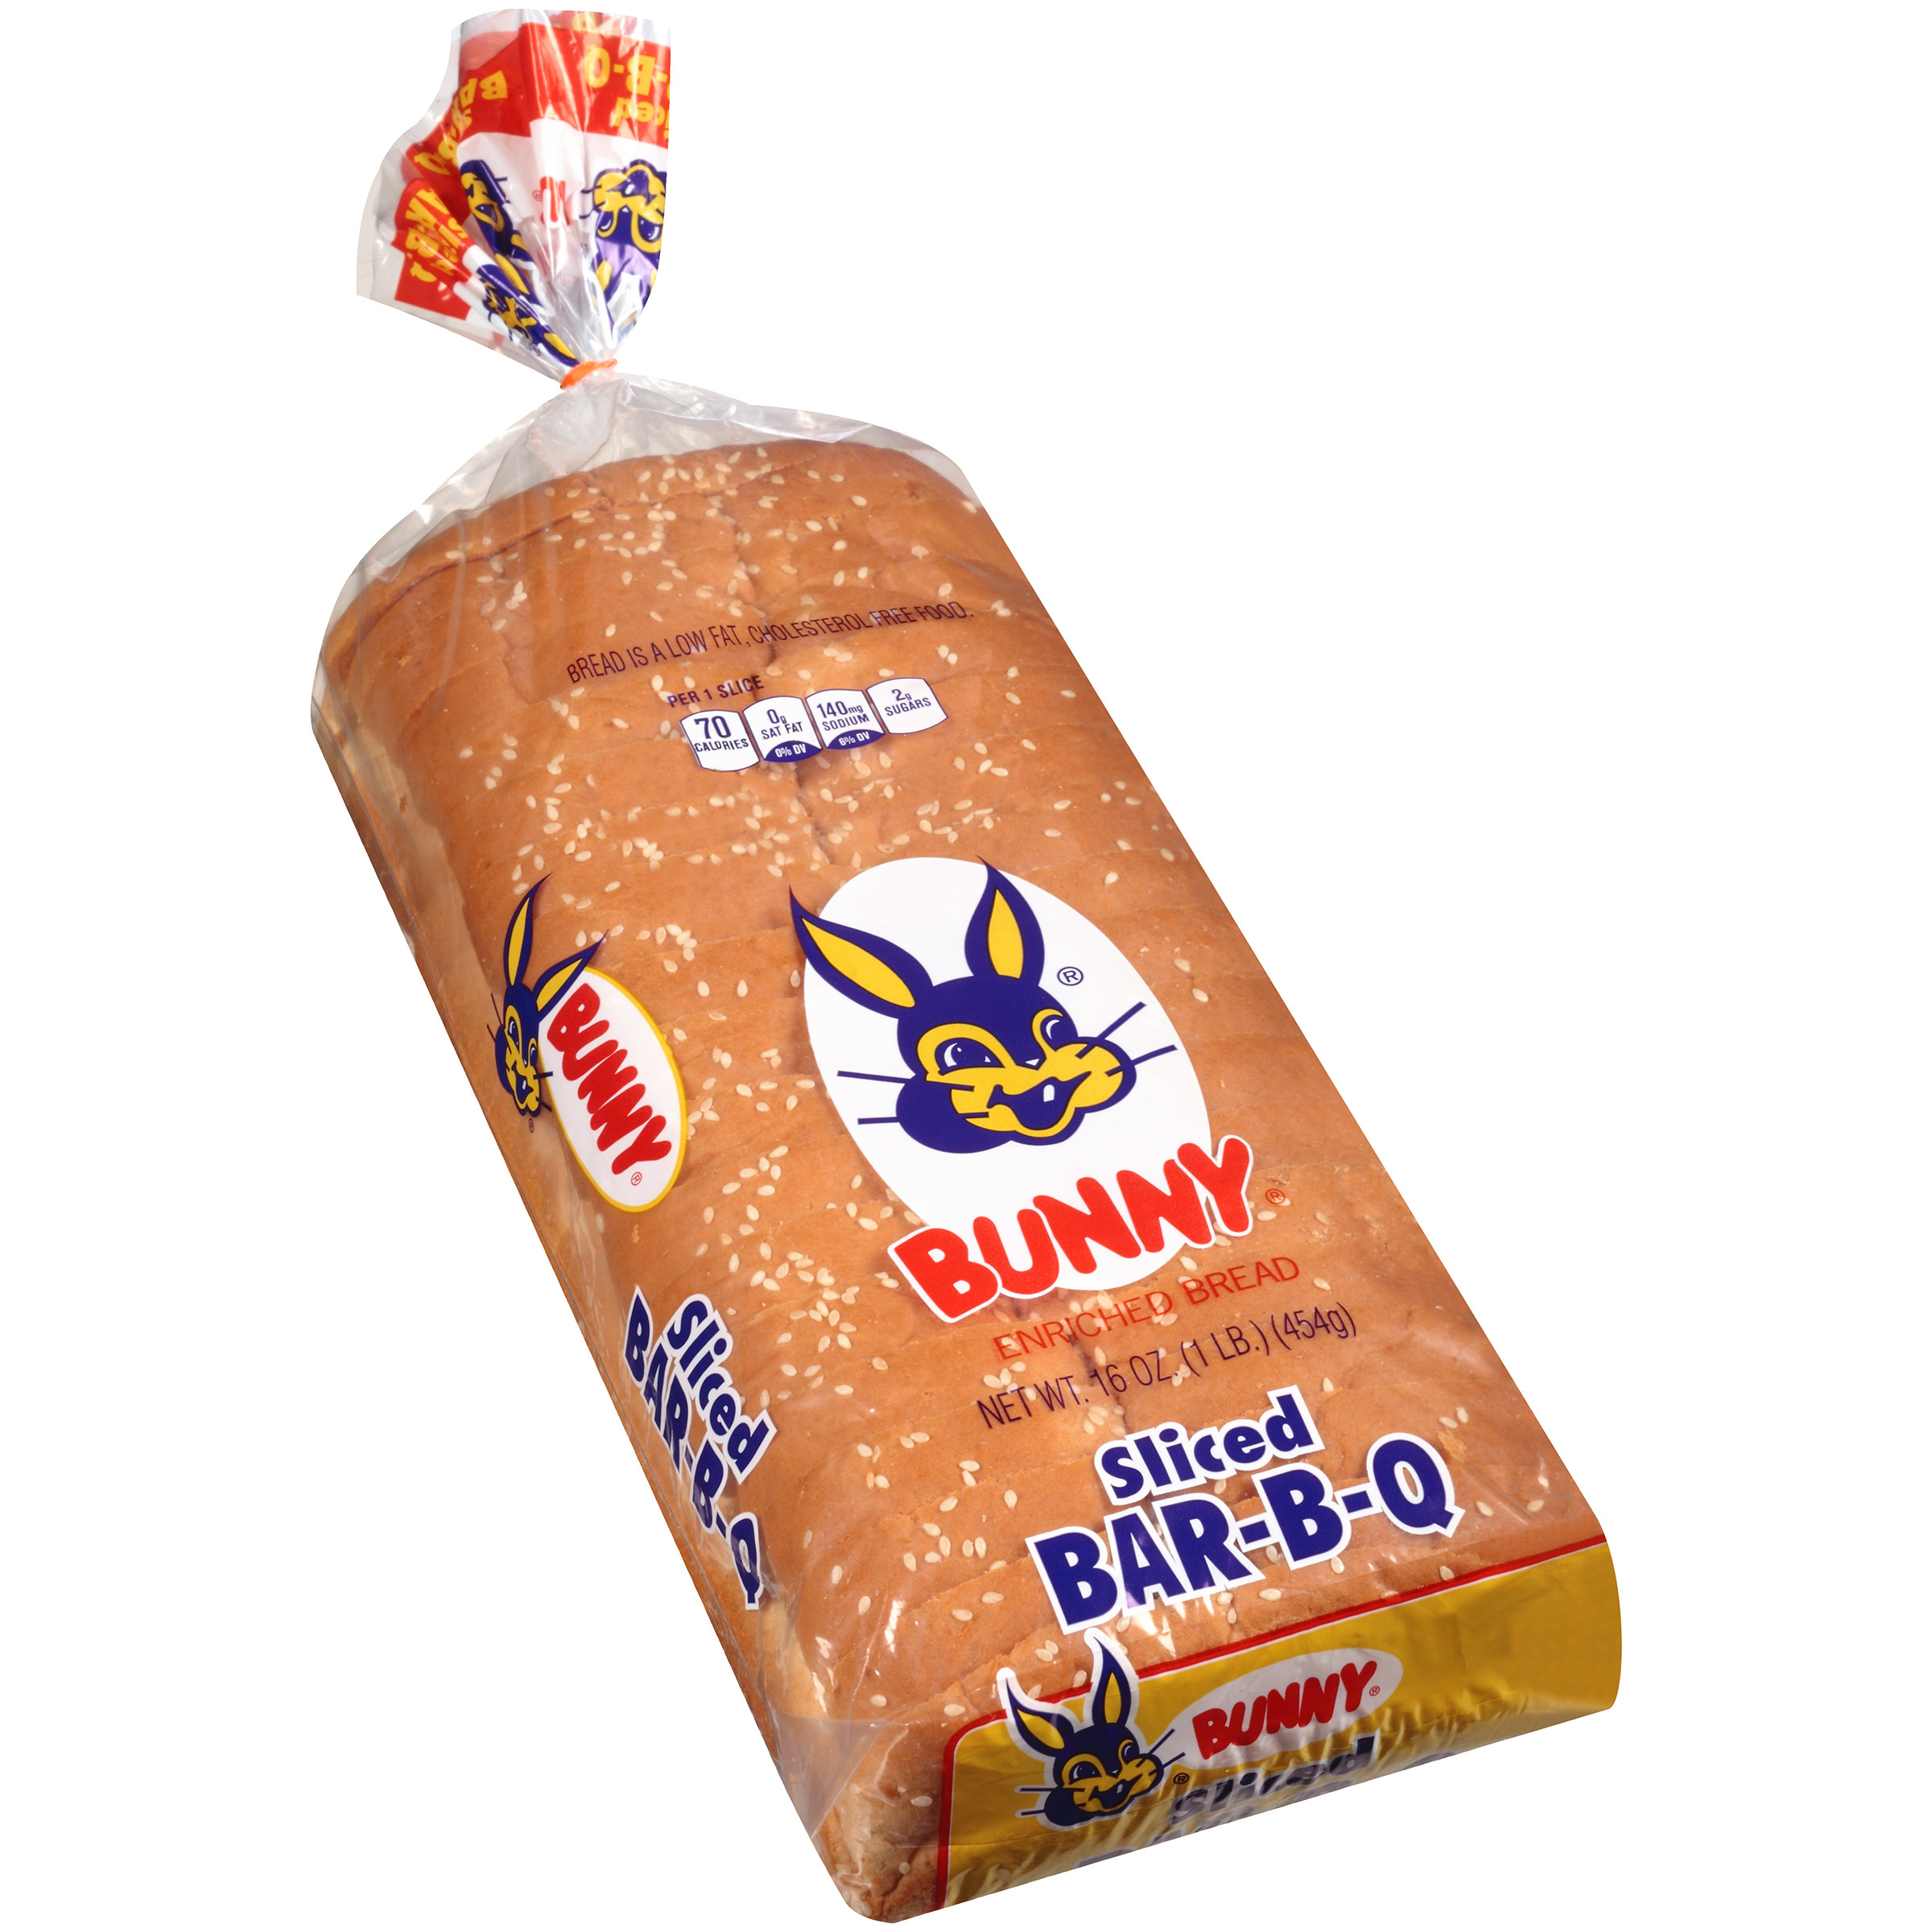 Healthy Life Bread Walmart
 low sodium bread at walmart